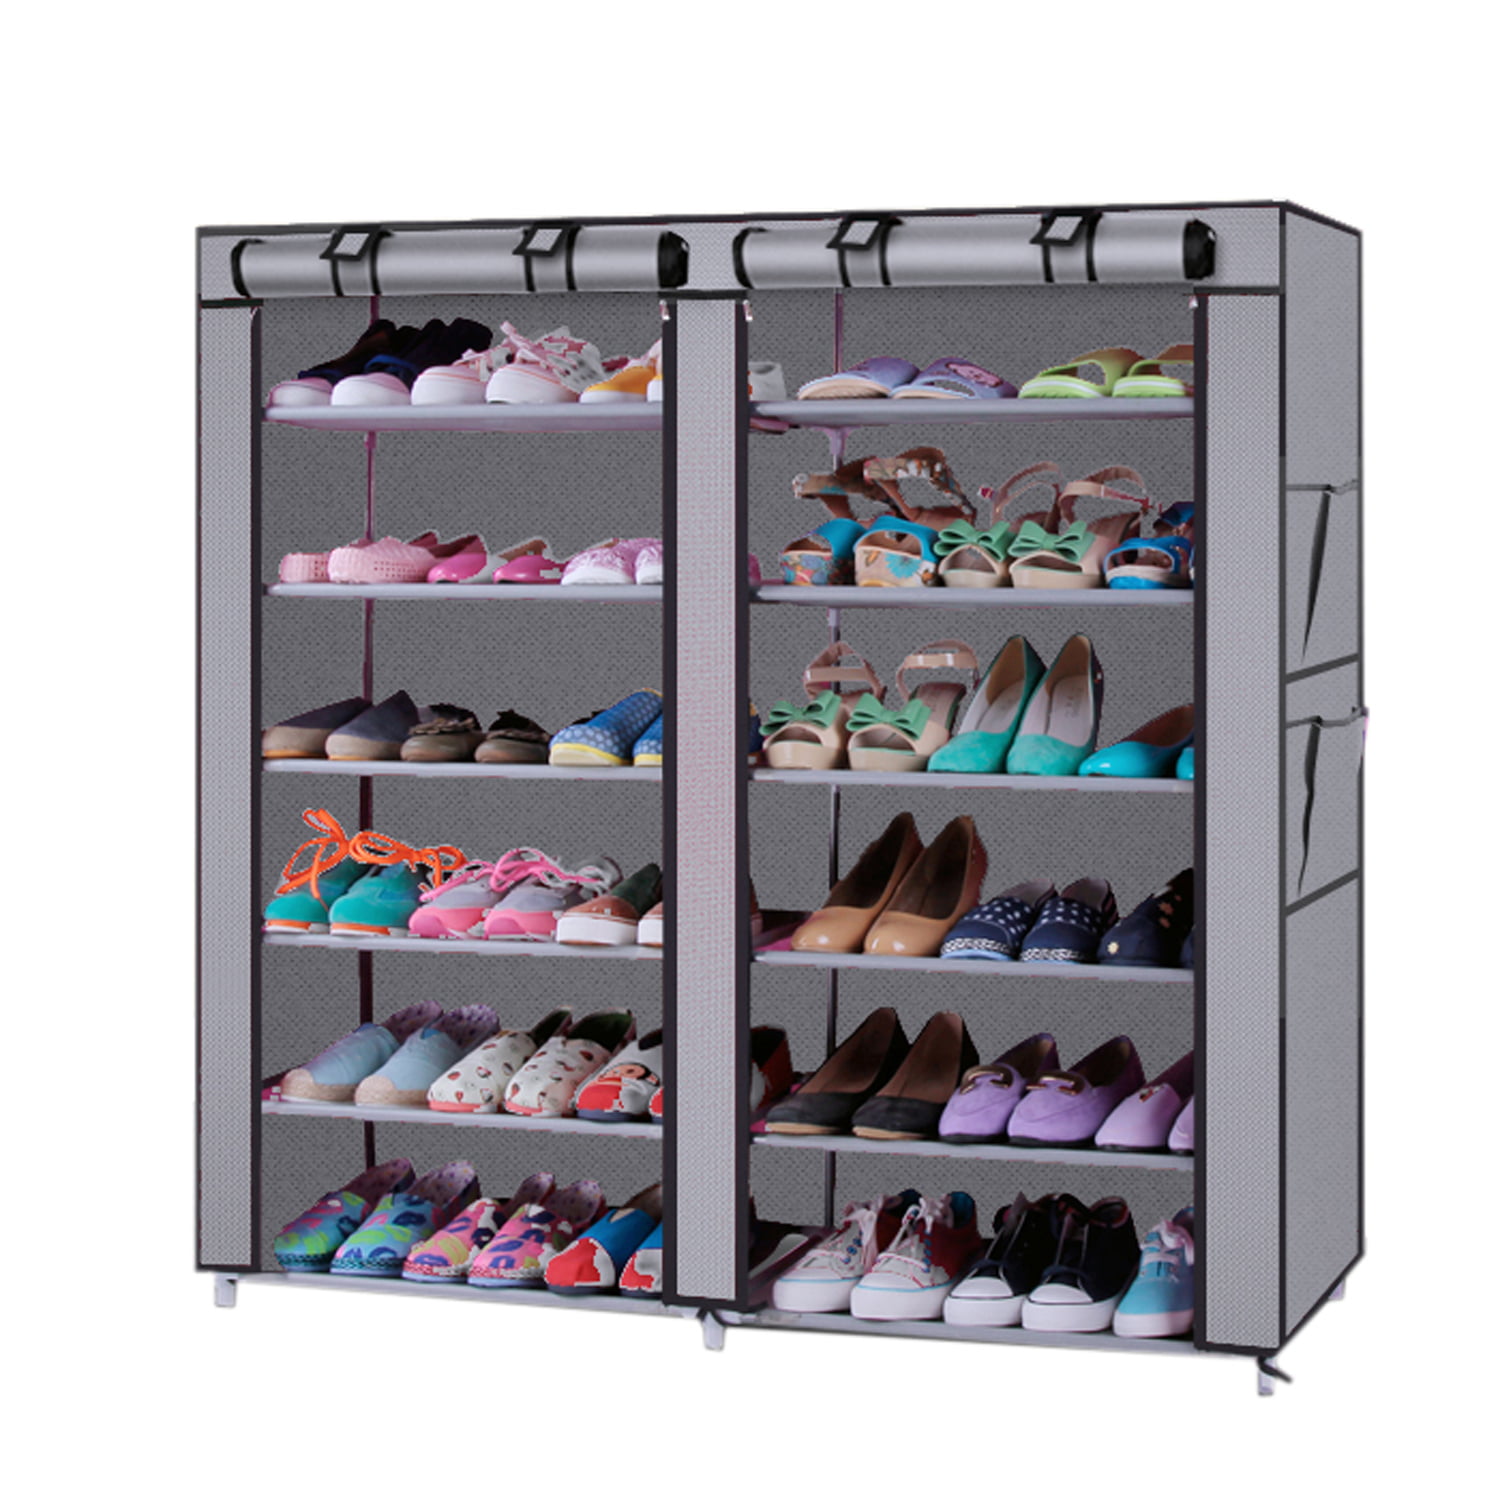 UWR-Nite 7 Tier Shoe Rack Storage Organizer, 36 Pairs Portable